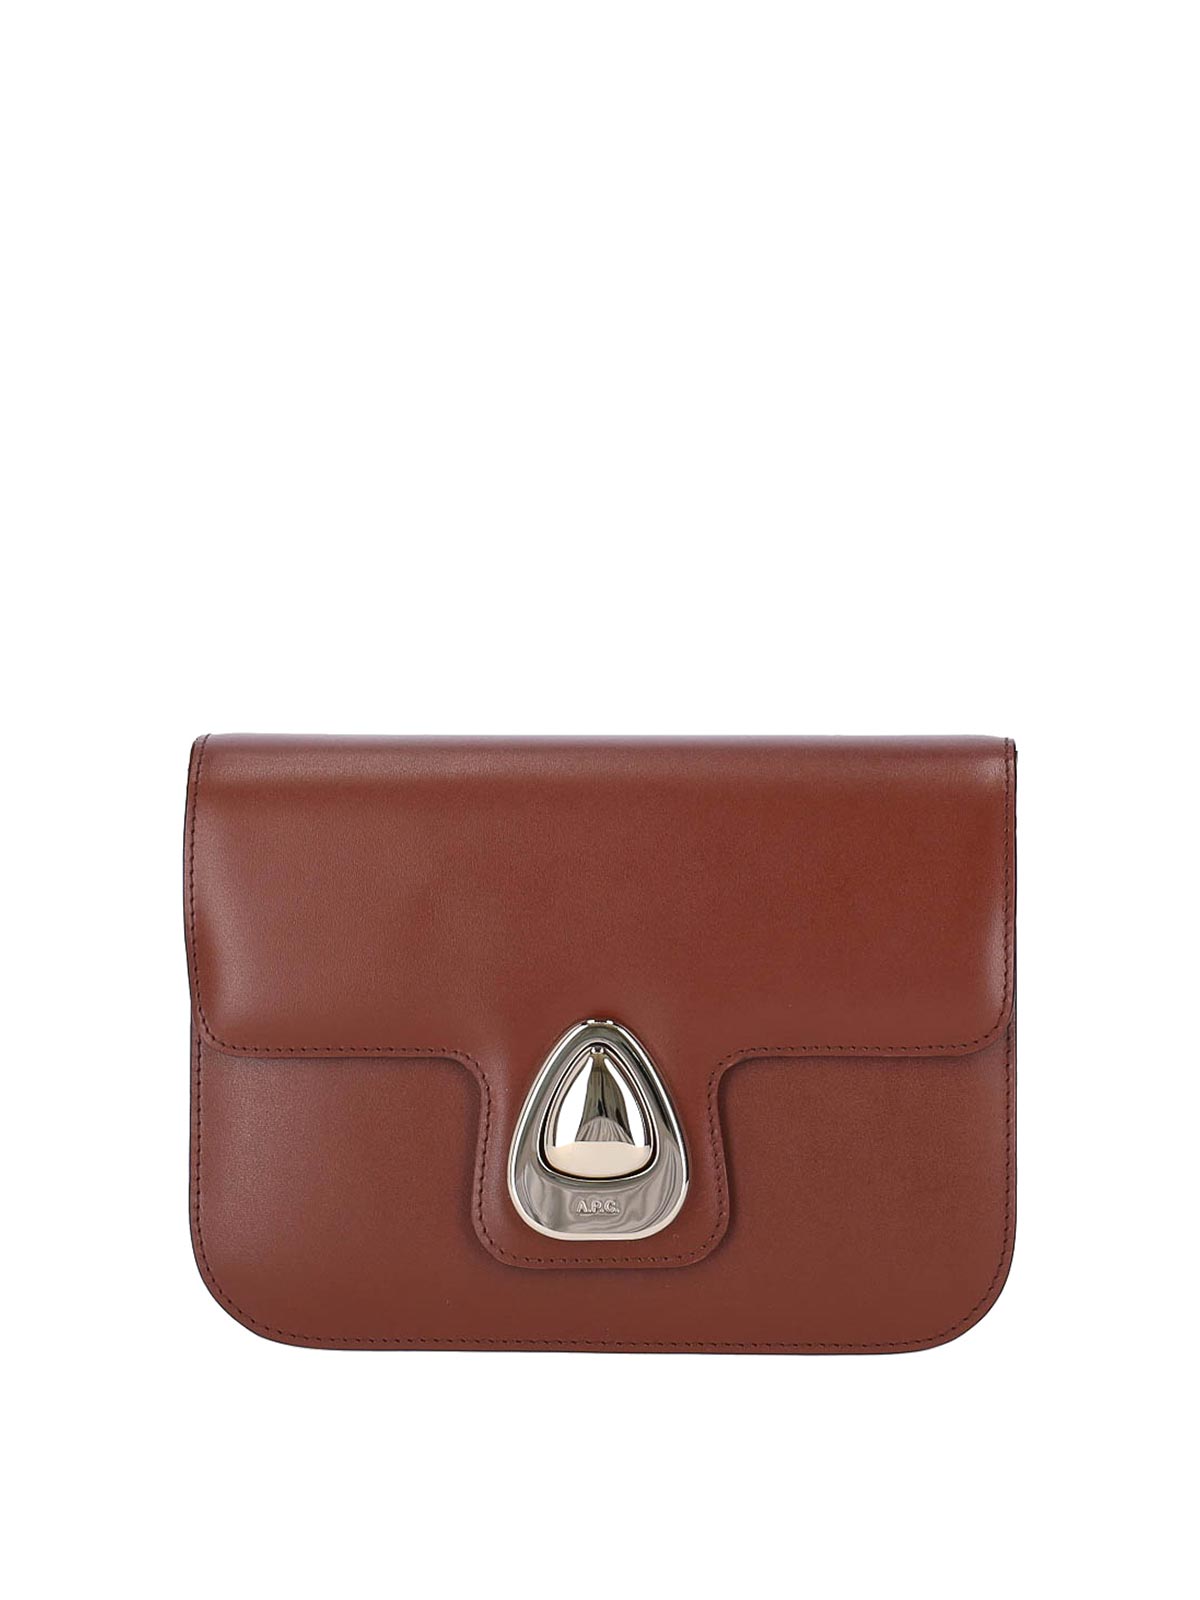 Shop Apc Small Shoulder Bag In Brown